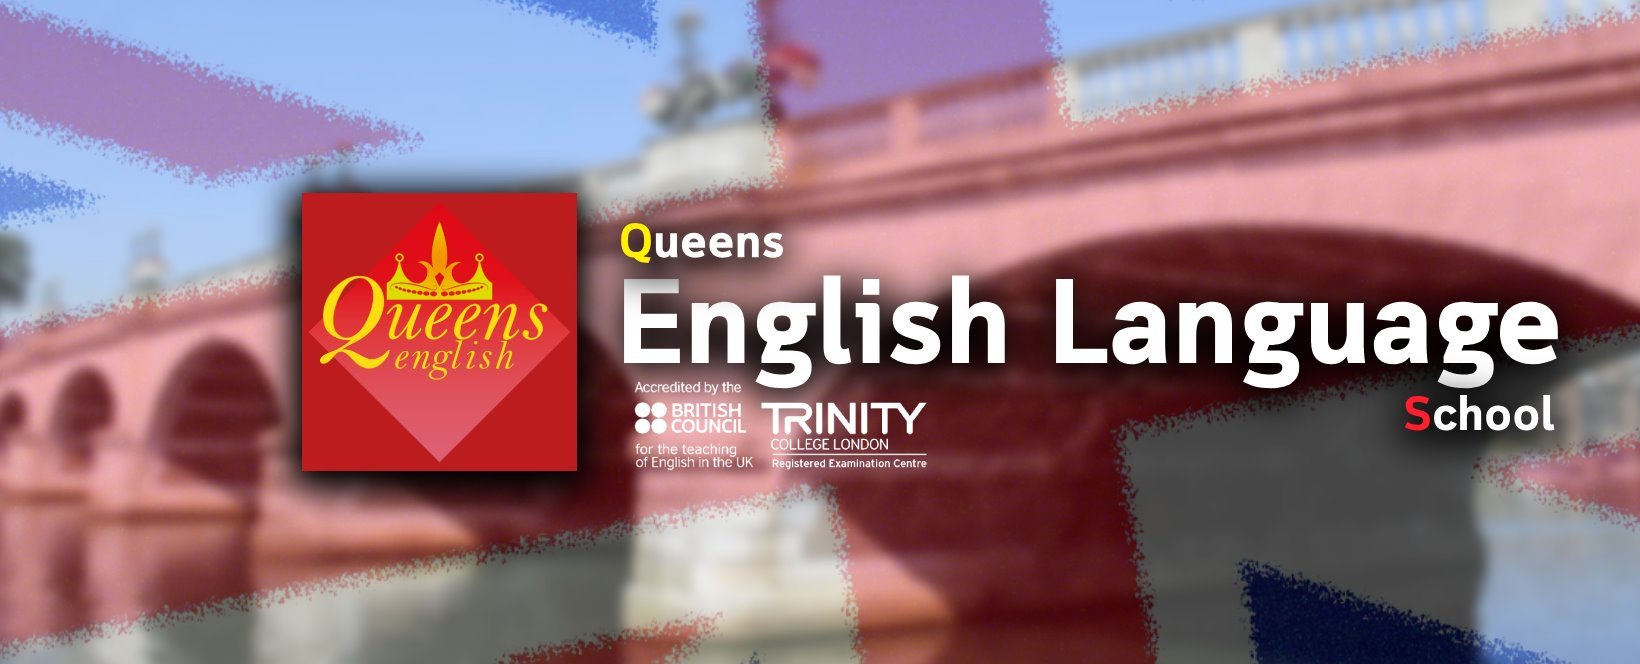 Queen's English Language School